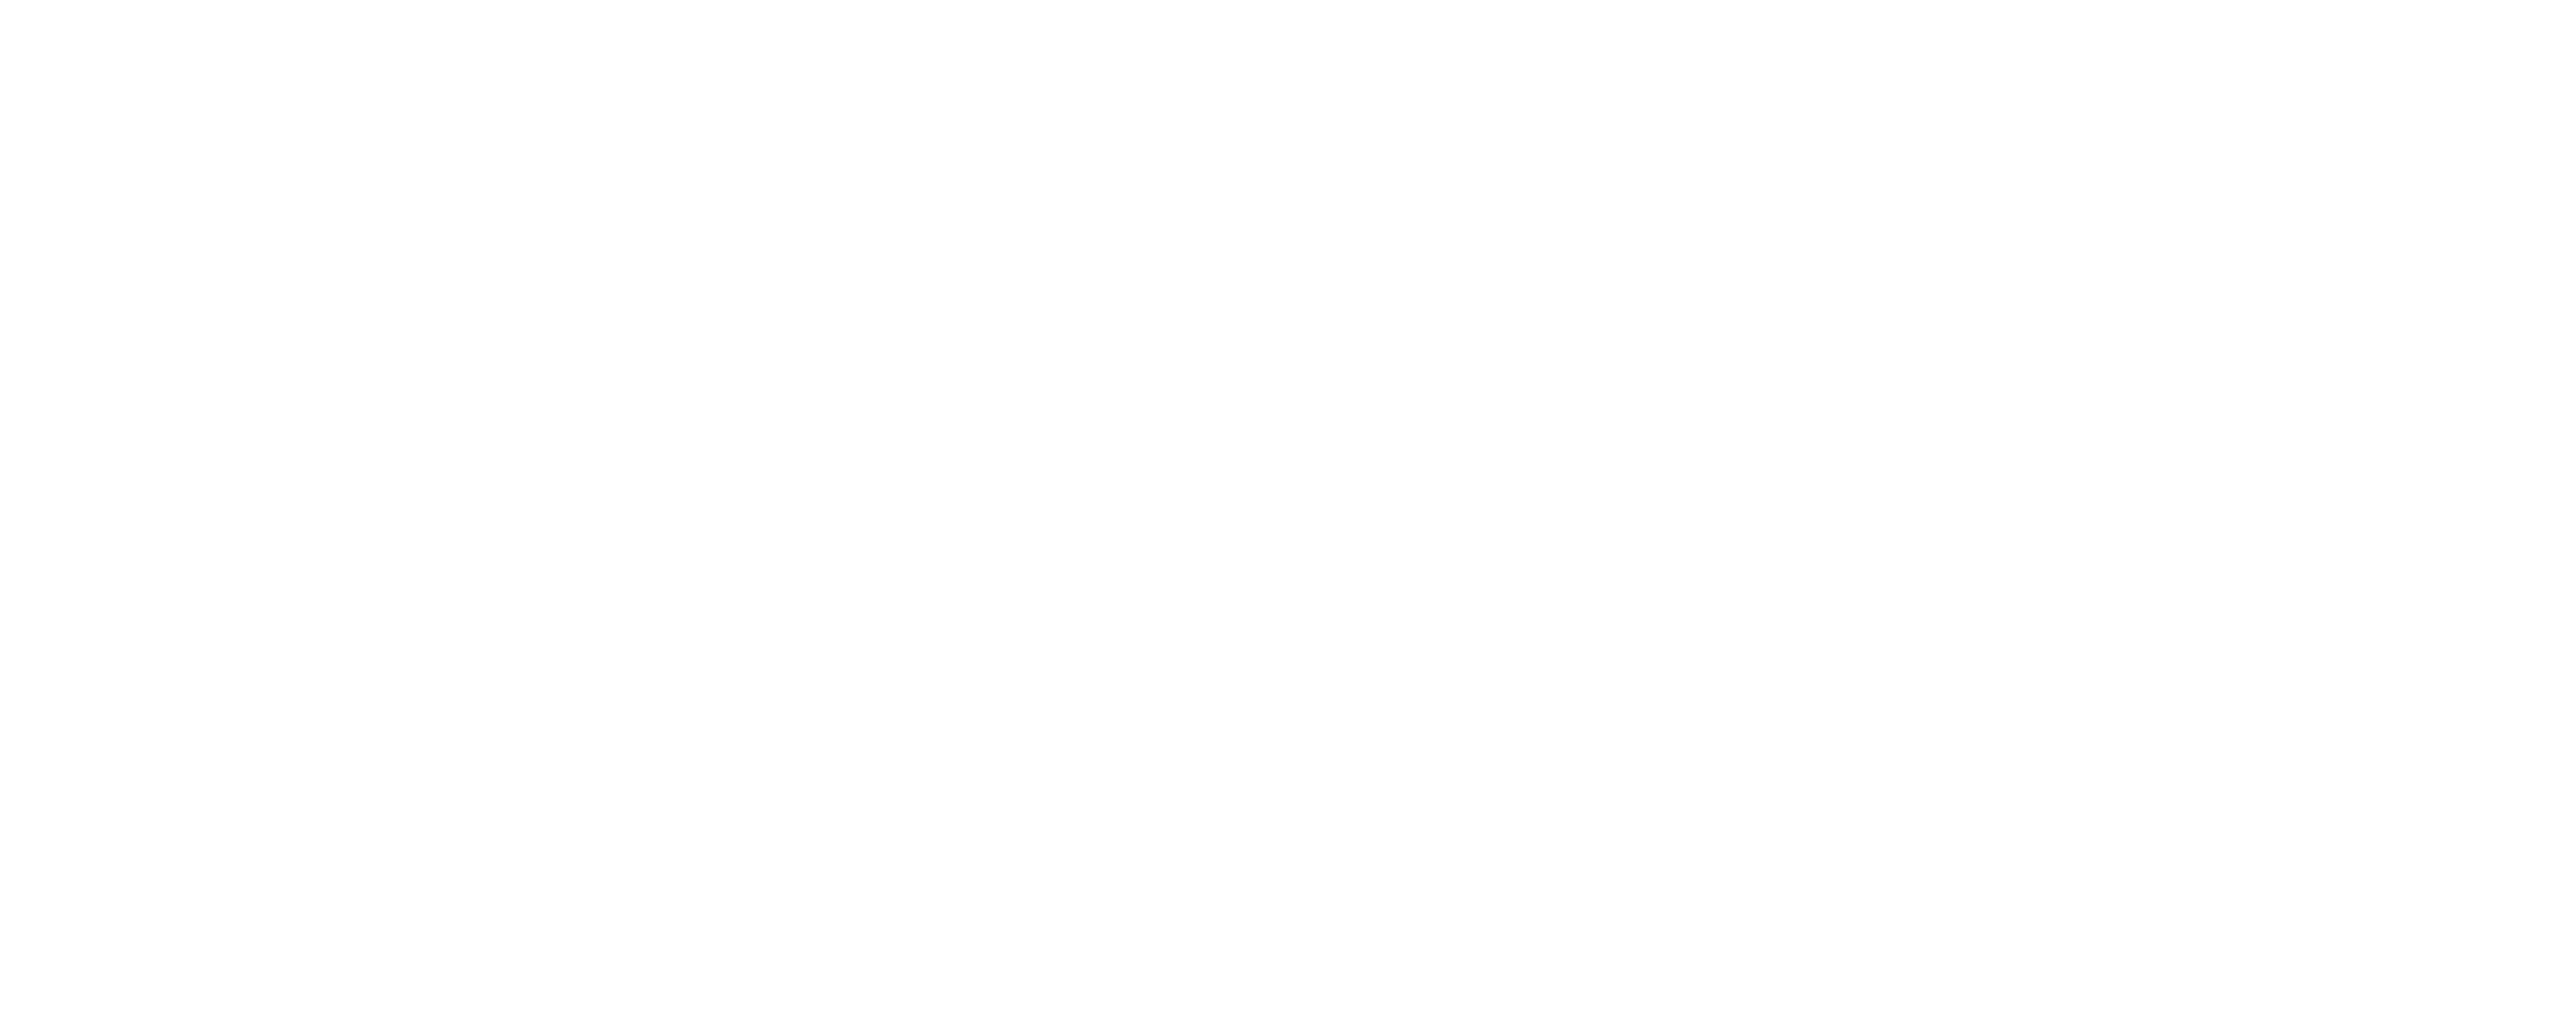 Not Cinderella's Type logo